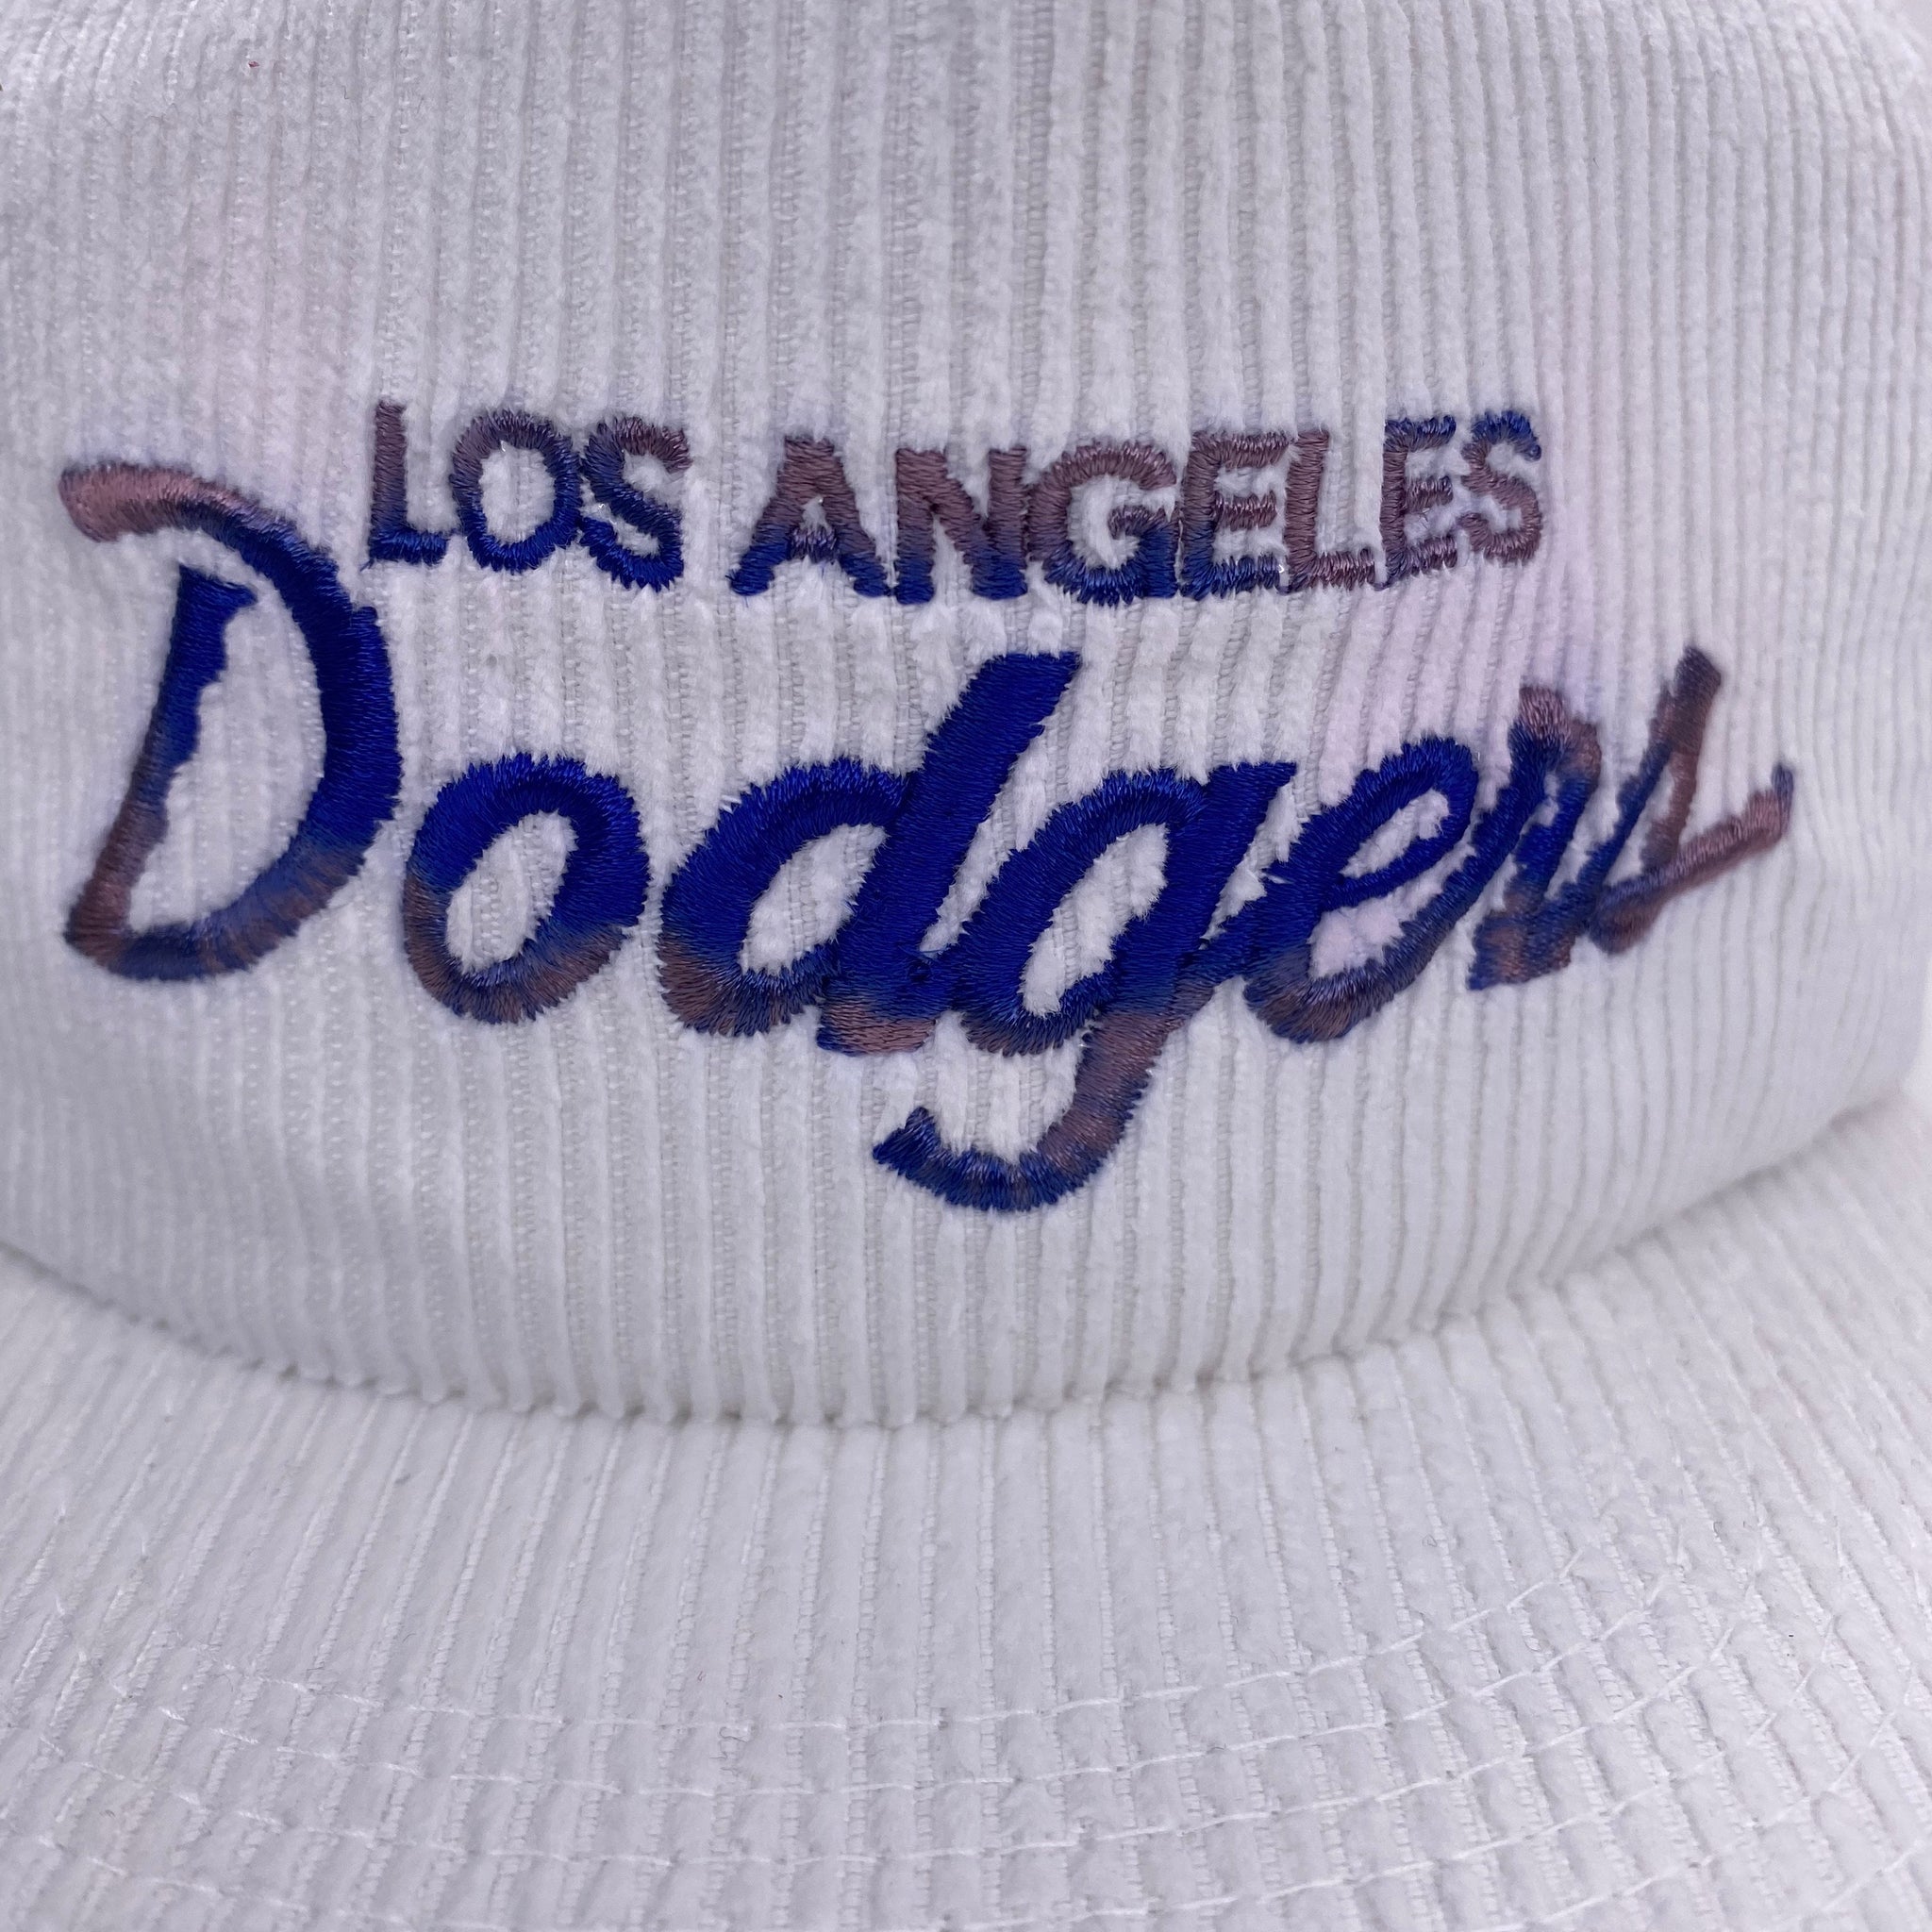 Los Angeles Dodgers Hat Vintage Dodgers Hat Vintage LA Dodgers